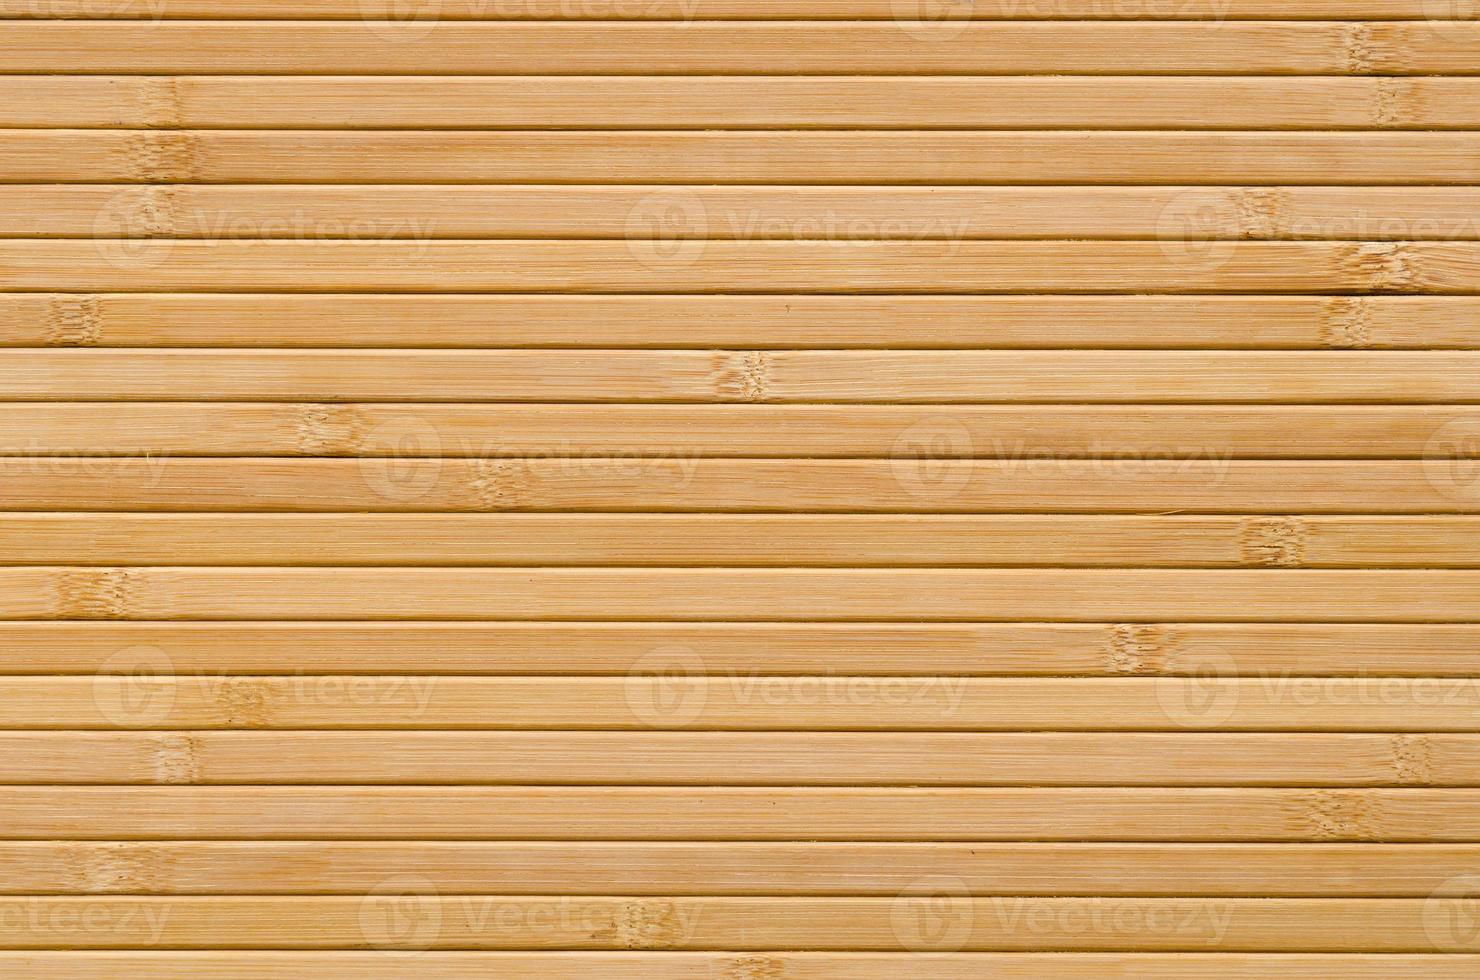 Wooden Bamboo Background. Wood Bamboo Texture Closeup Stock Photo - Image  of backdrop, edge: 192208318